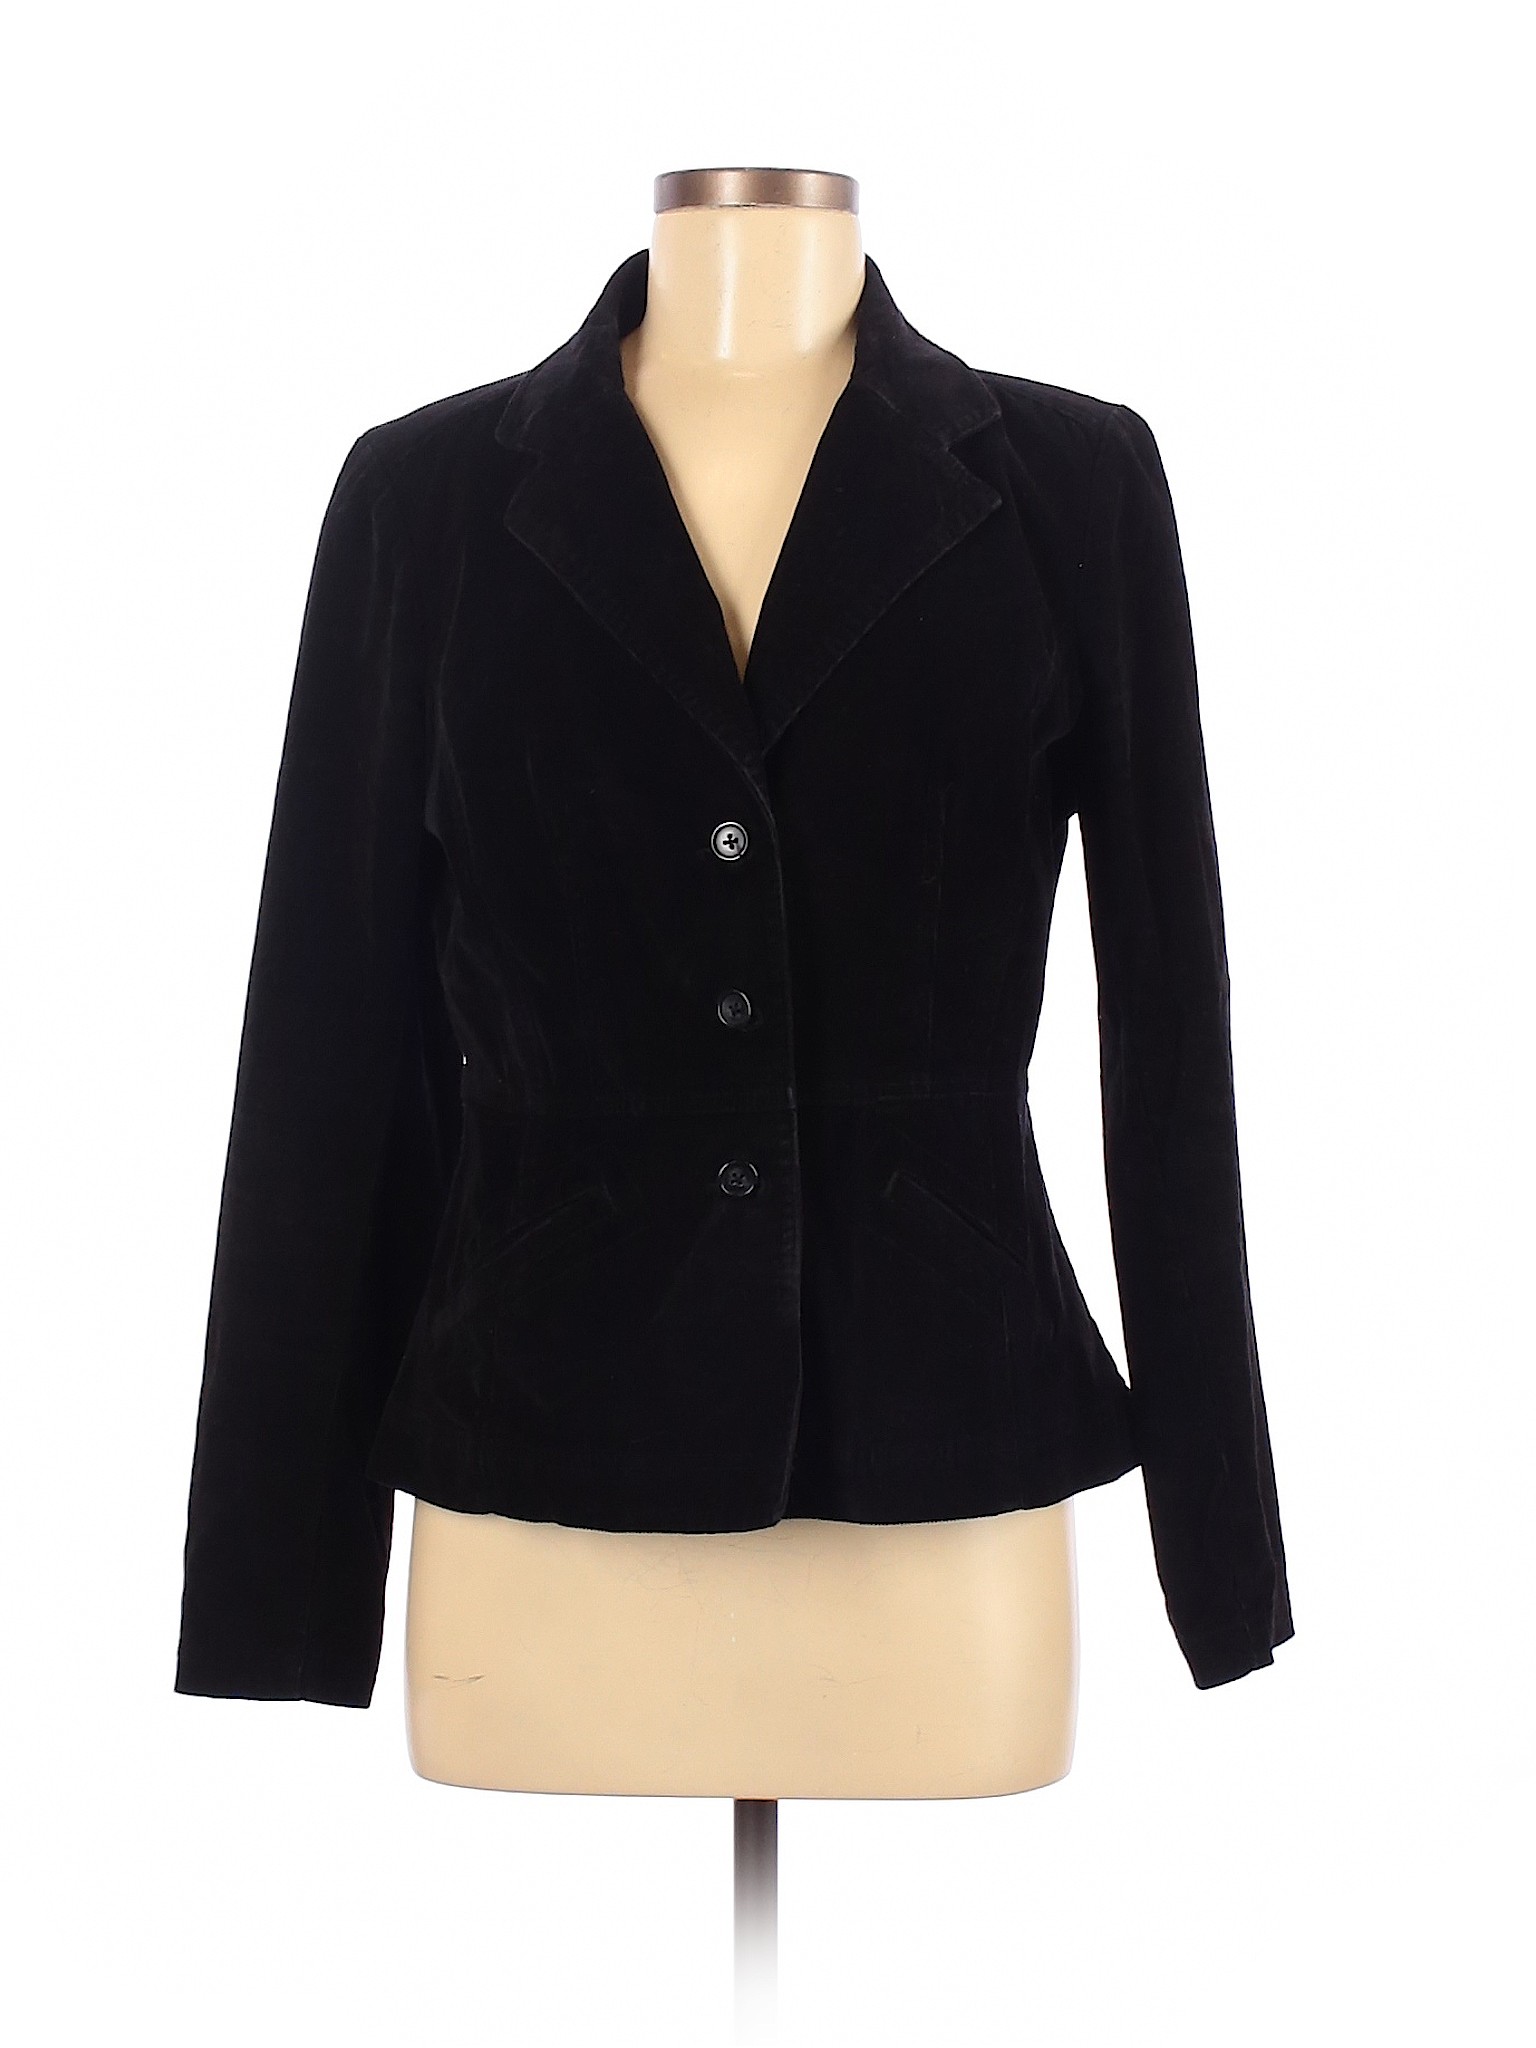 St. John's Bay Women Black Jacket M | eBay